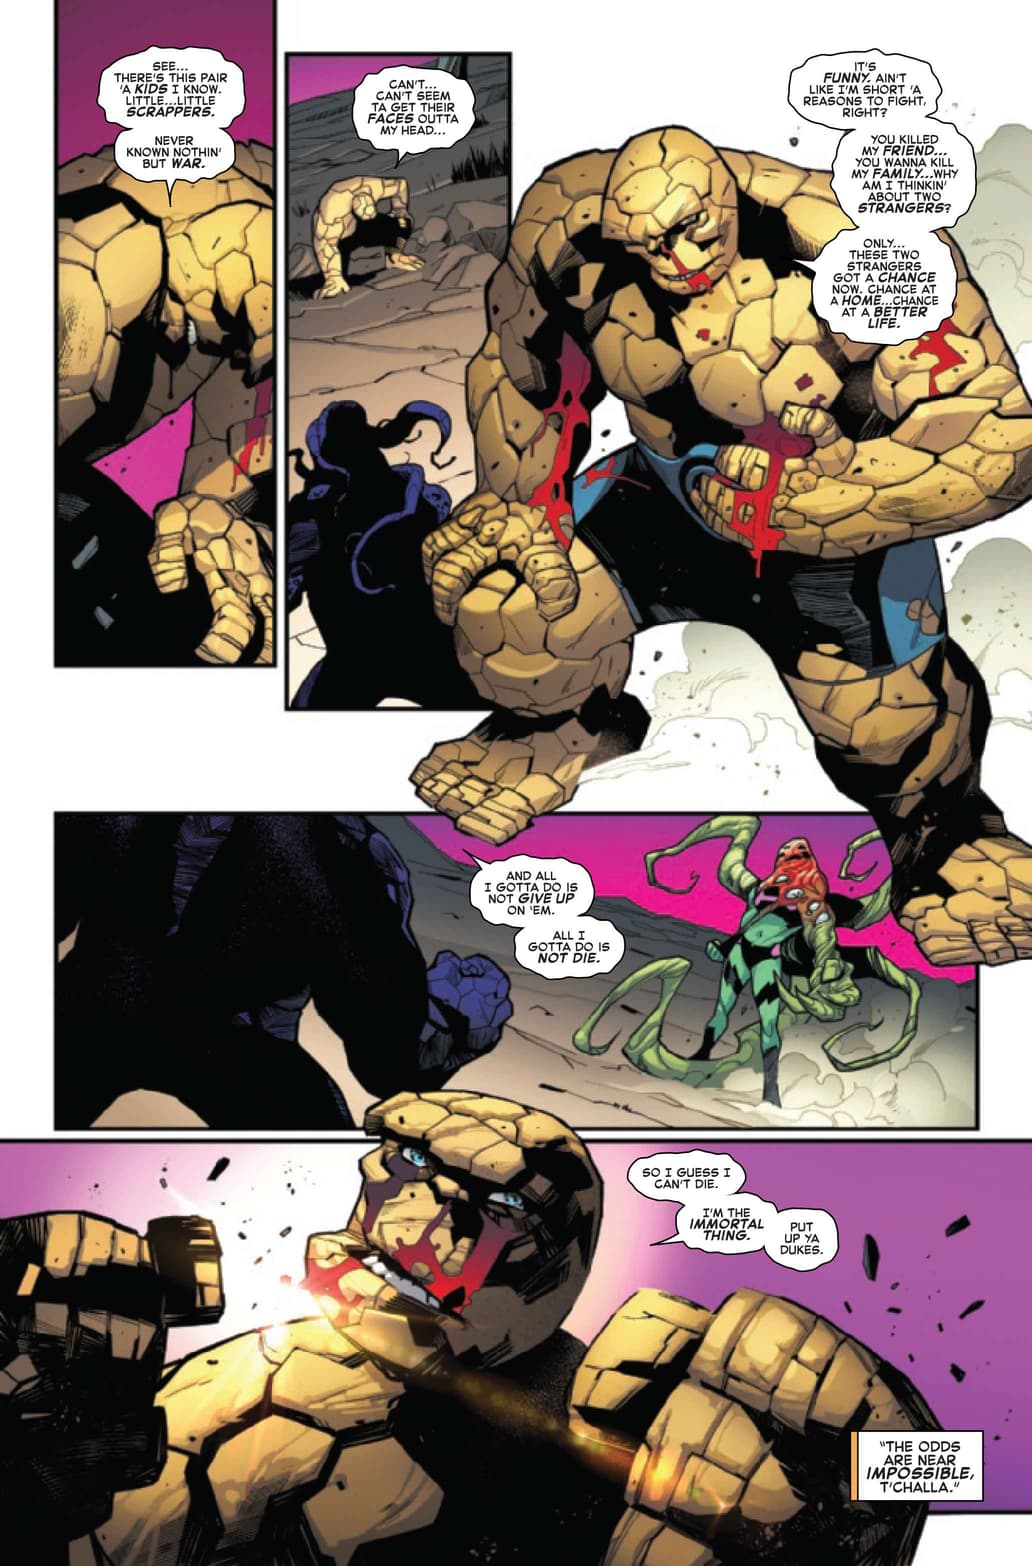 Thing rallying against She-Hulk